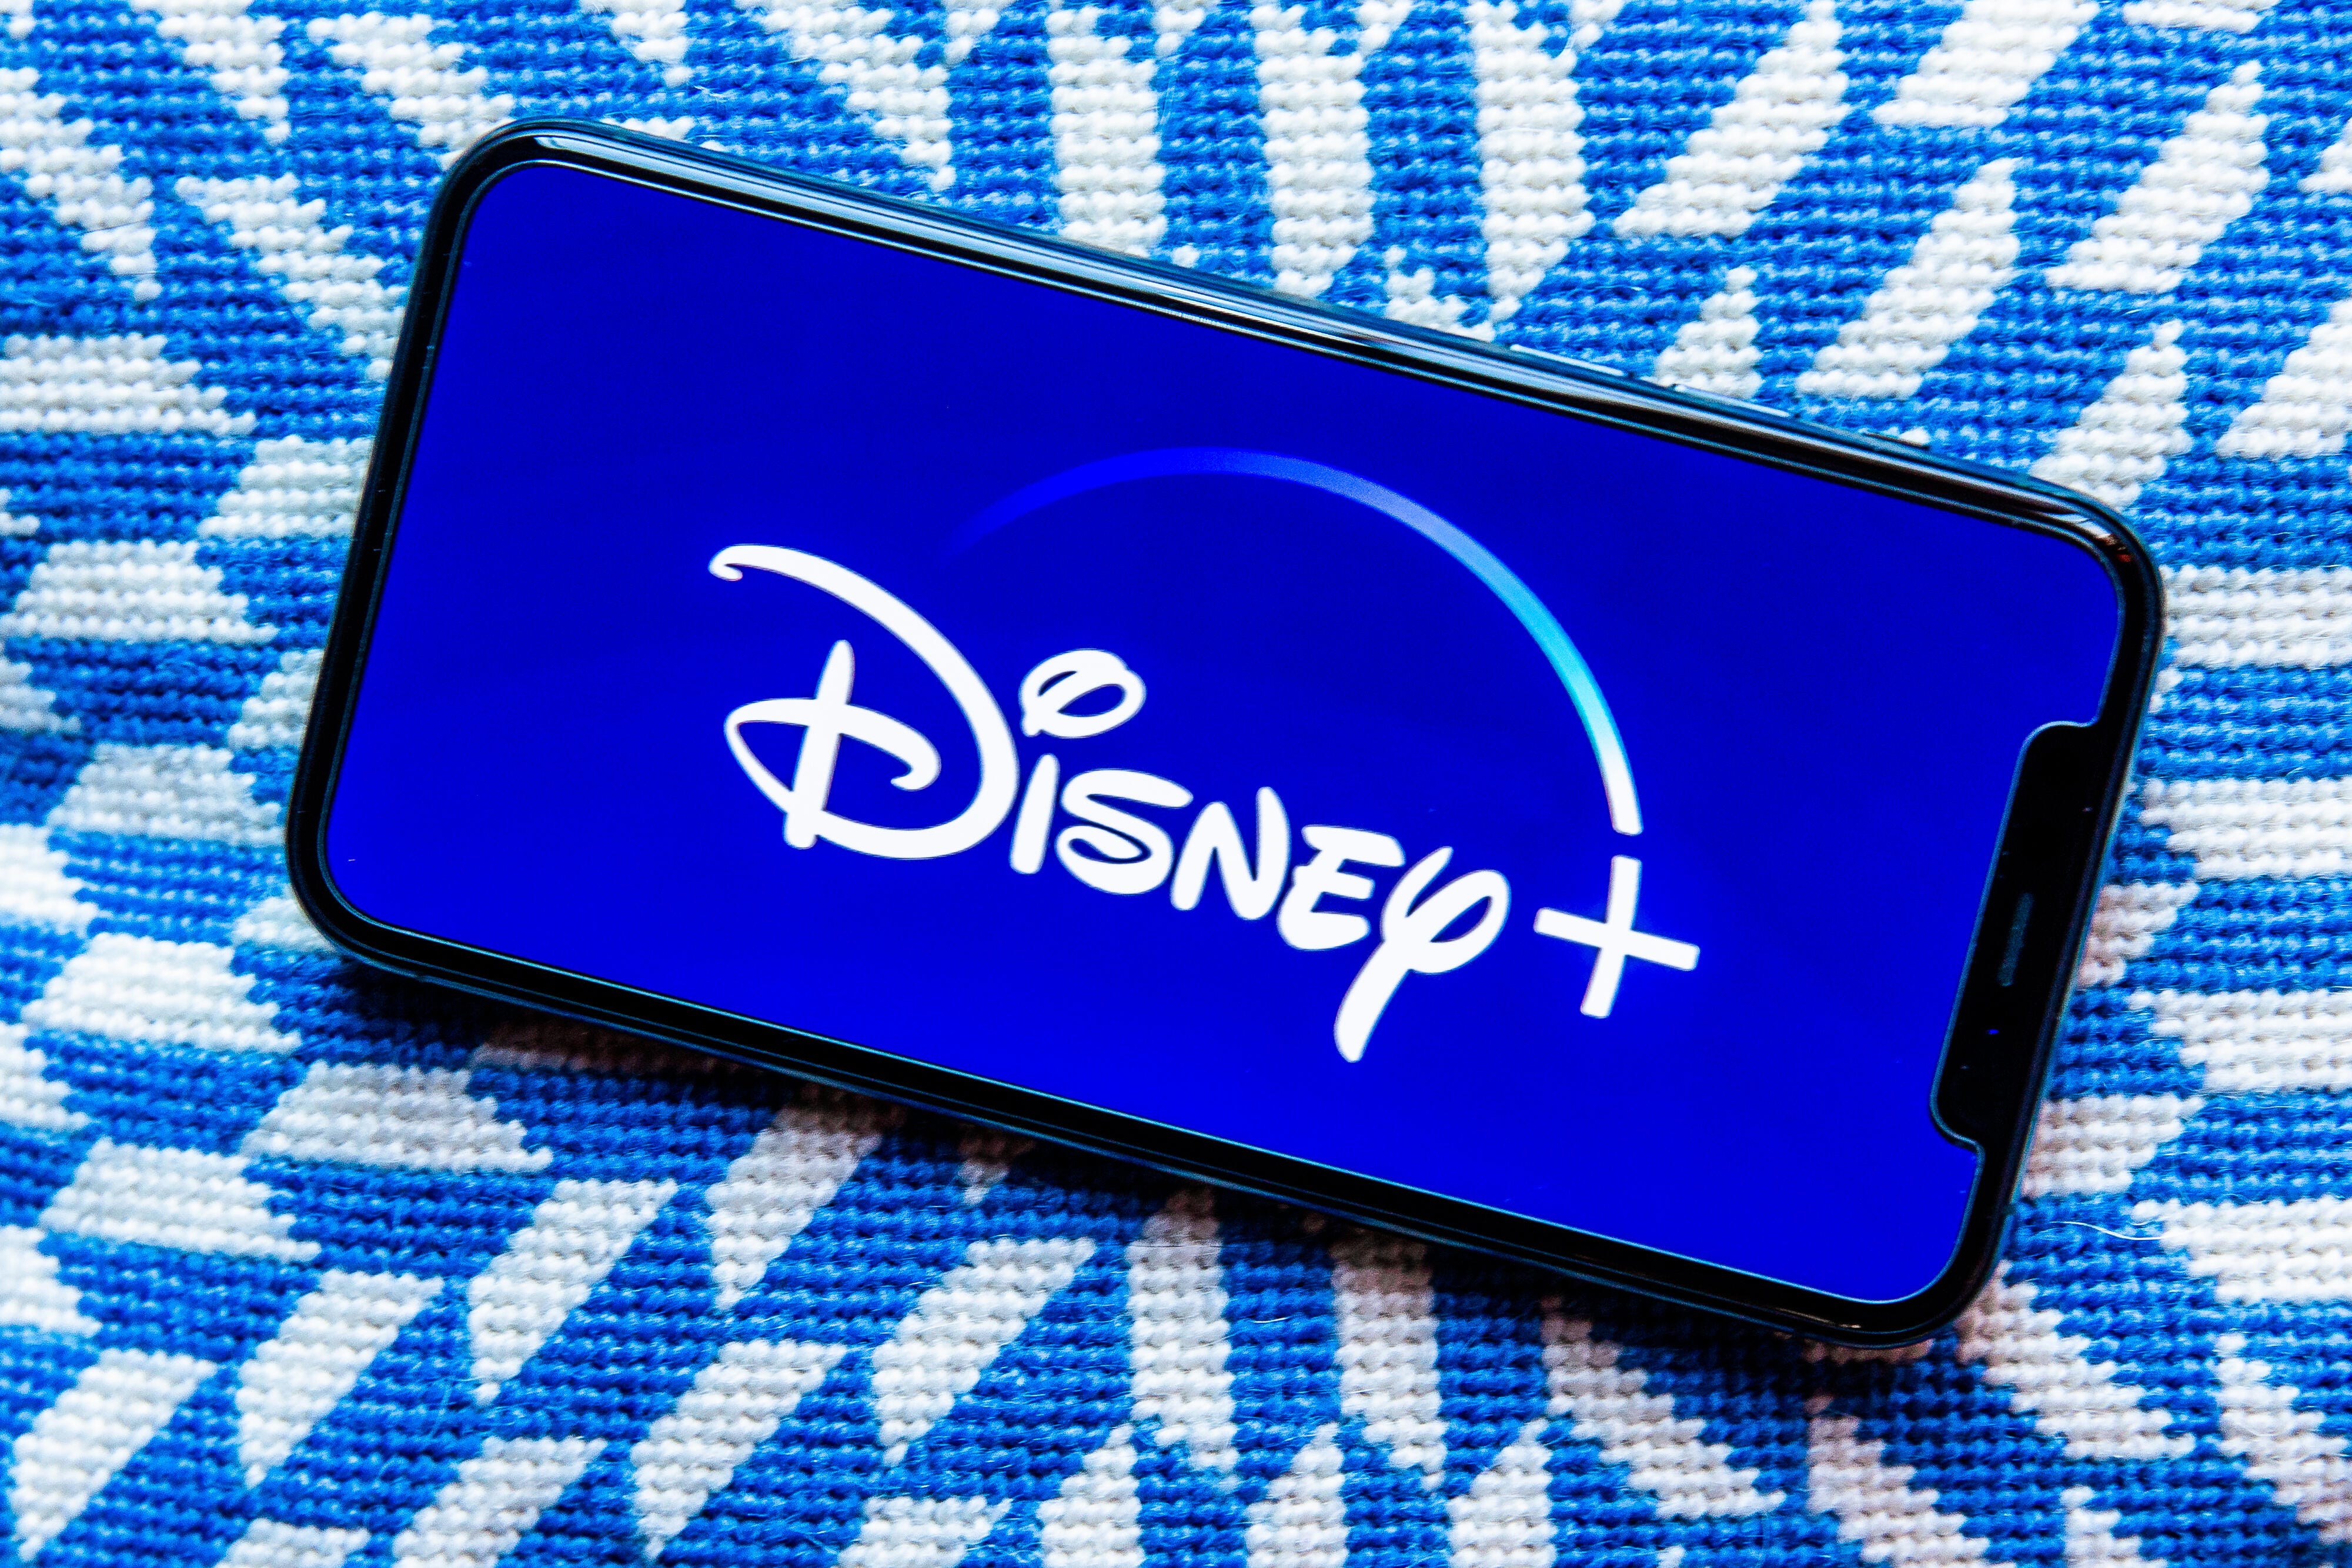 Disney Plus' logo on a phone